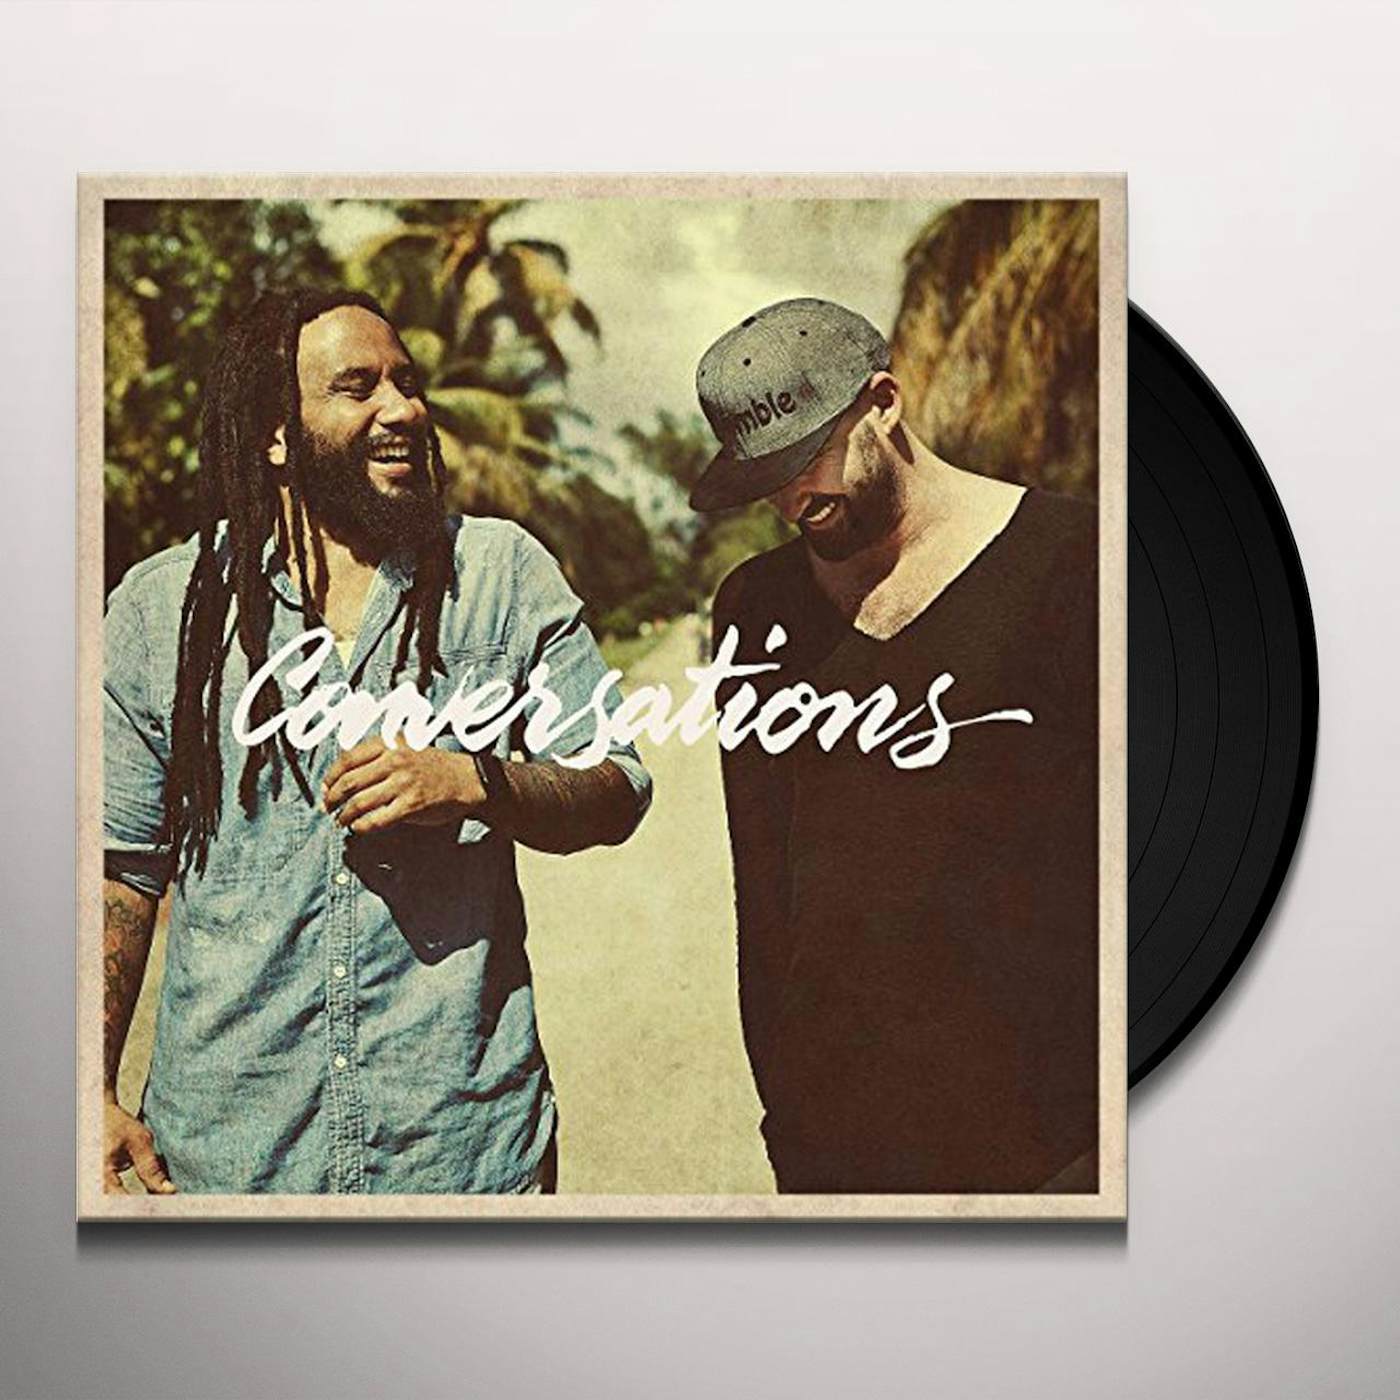 Gentleman & Ky-Mani Marley Conversations Vinyl Record